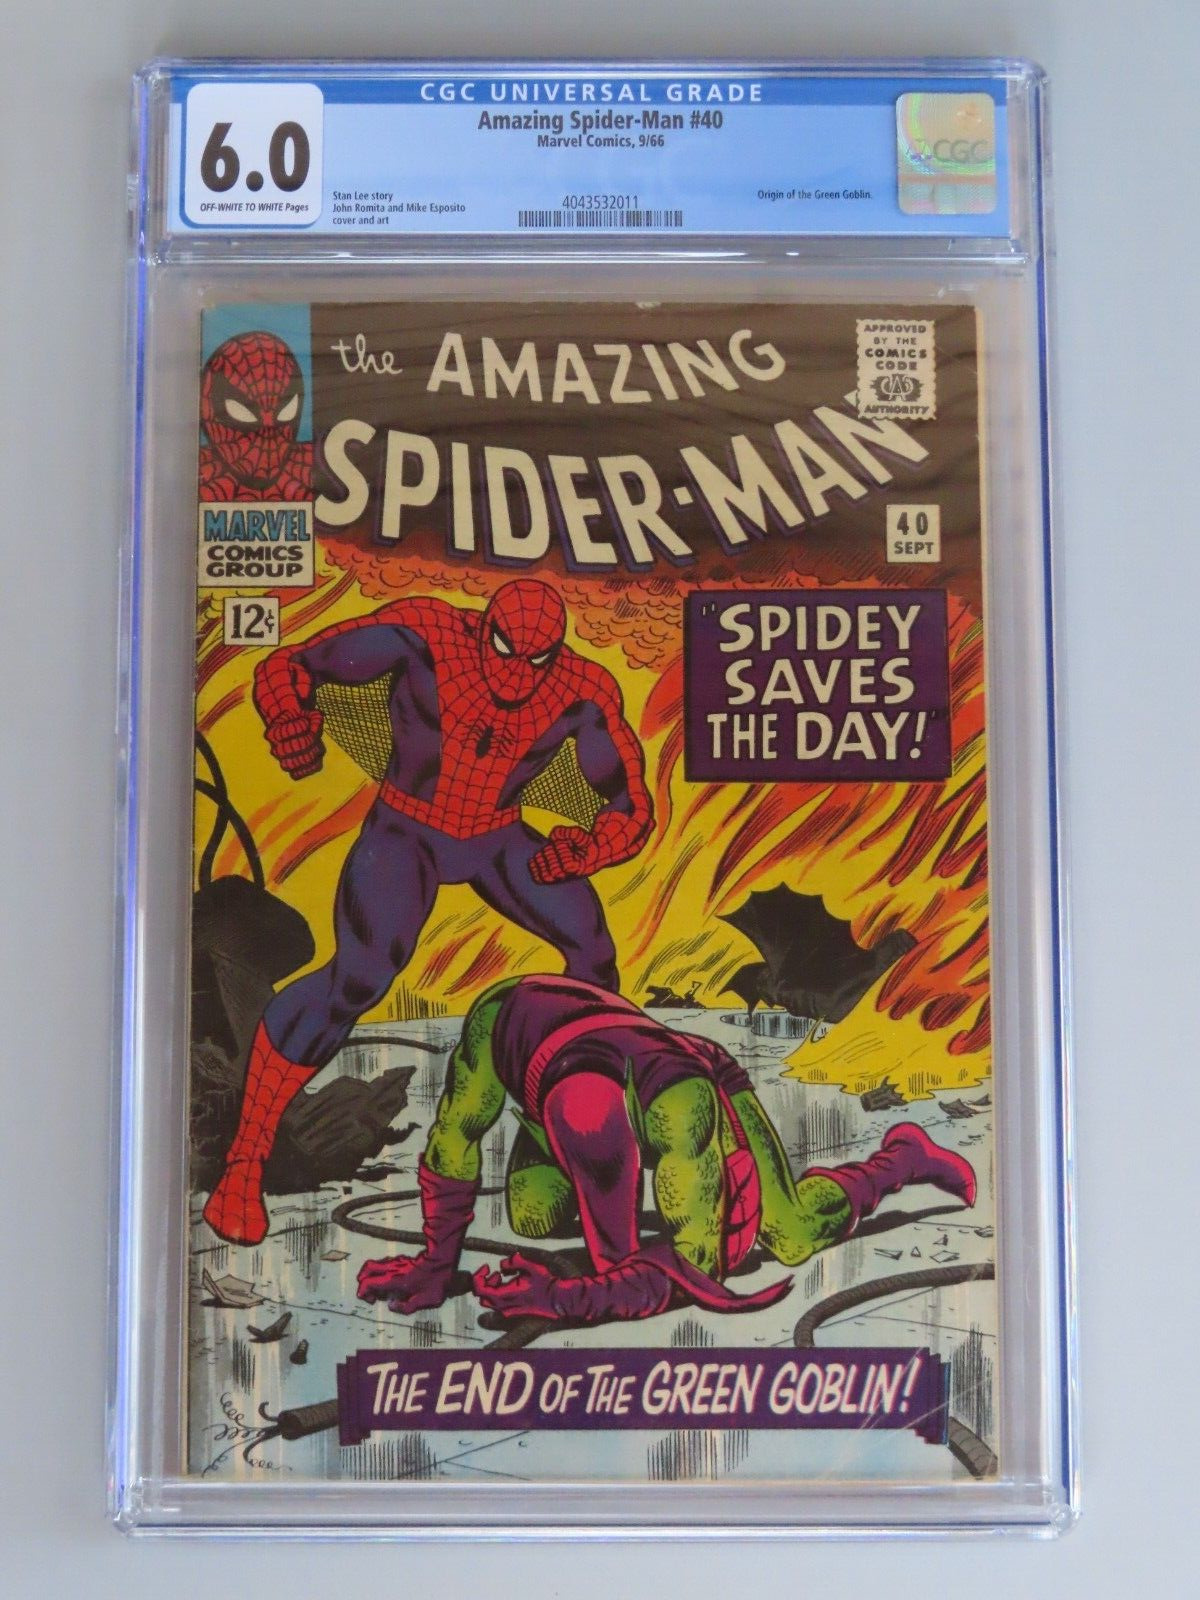 Amazing Spider-Man #40 (1966) - CGC 6.0 - Green Goblin Origin